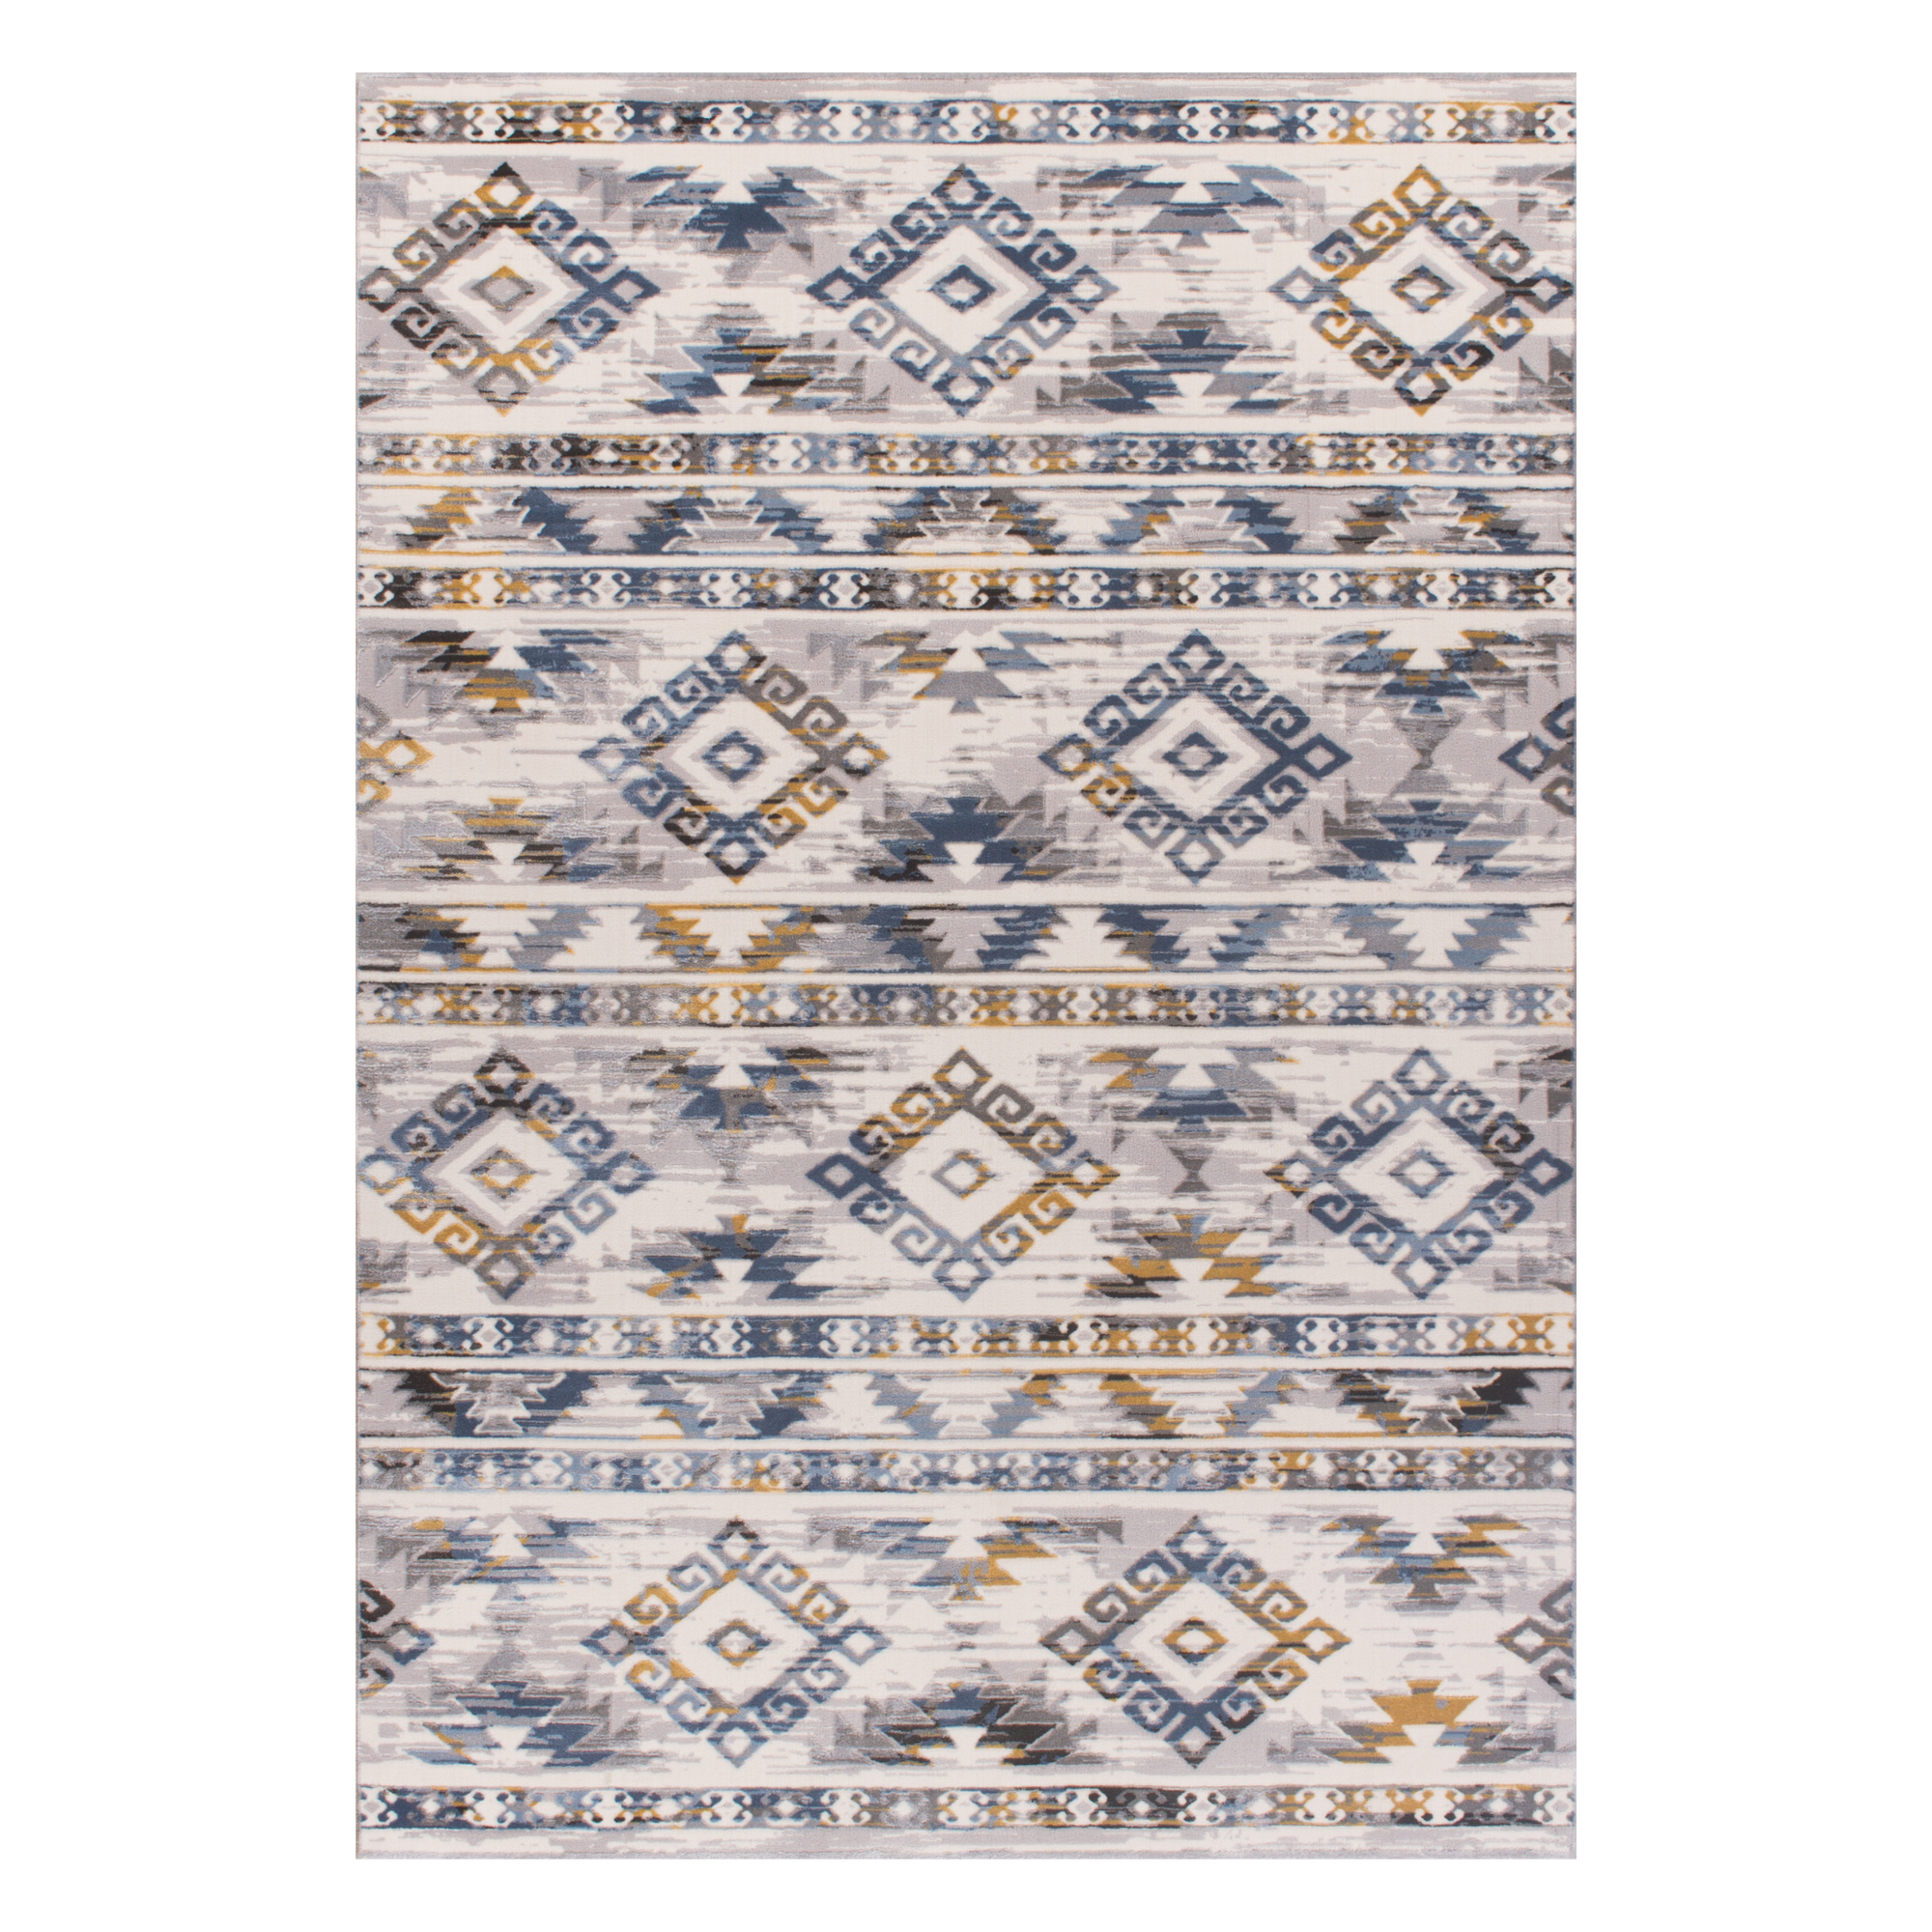 white and blue rug | سجاد ابيض وازرق (8785267523905)